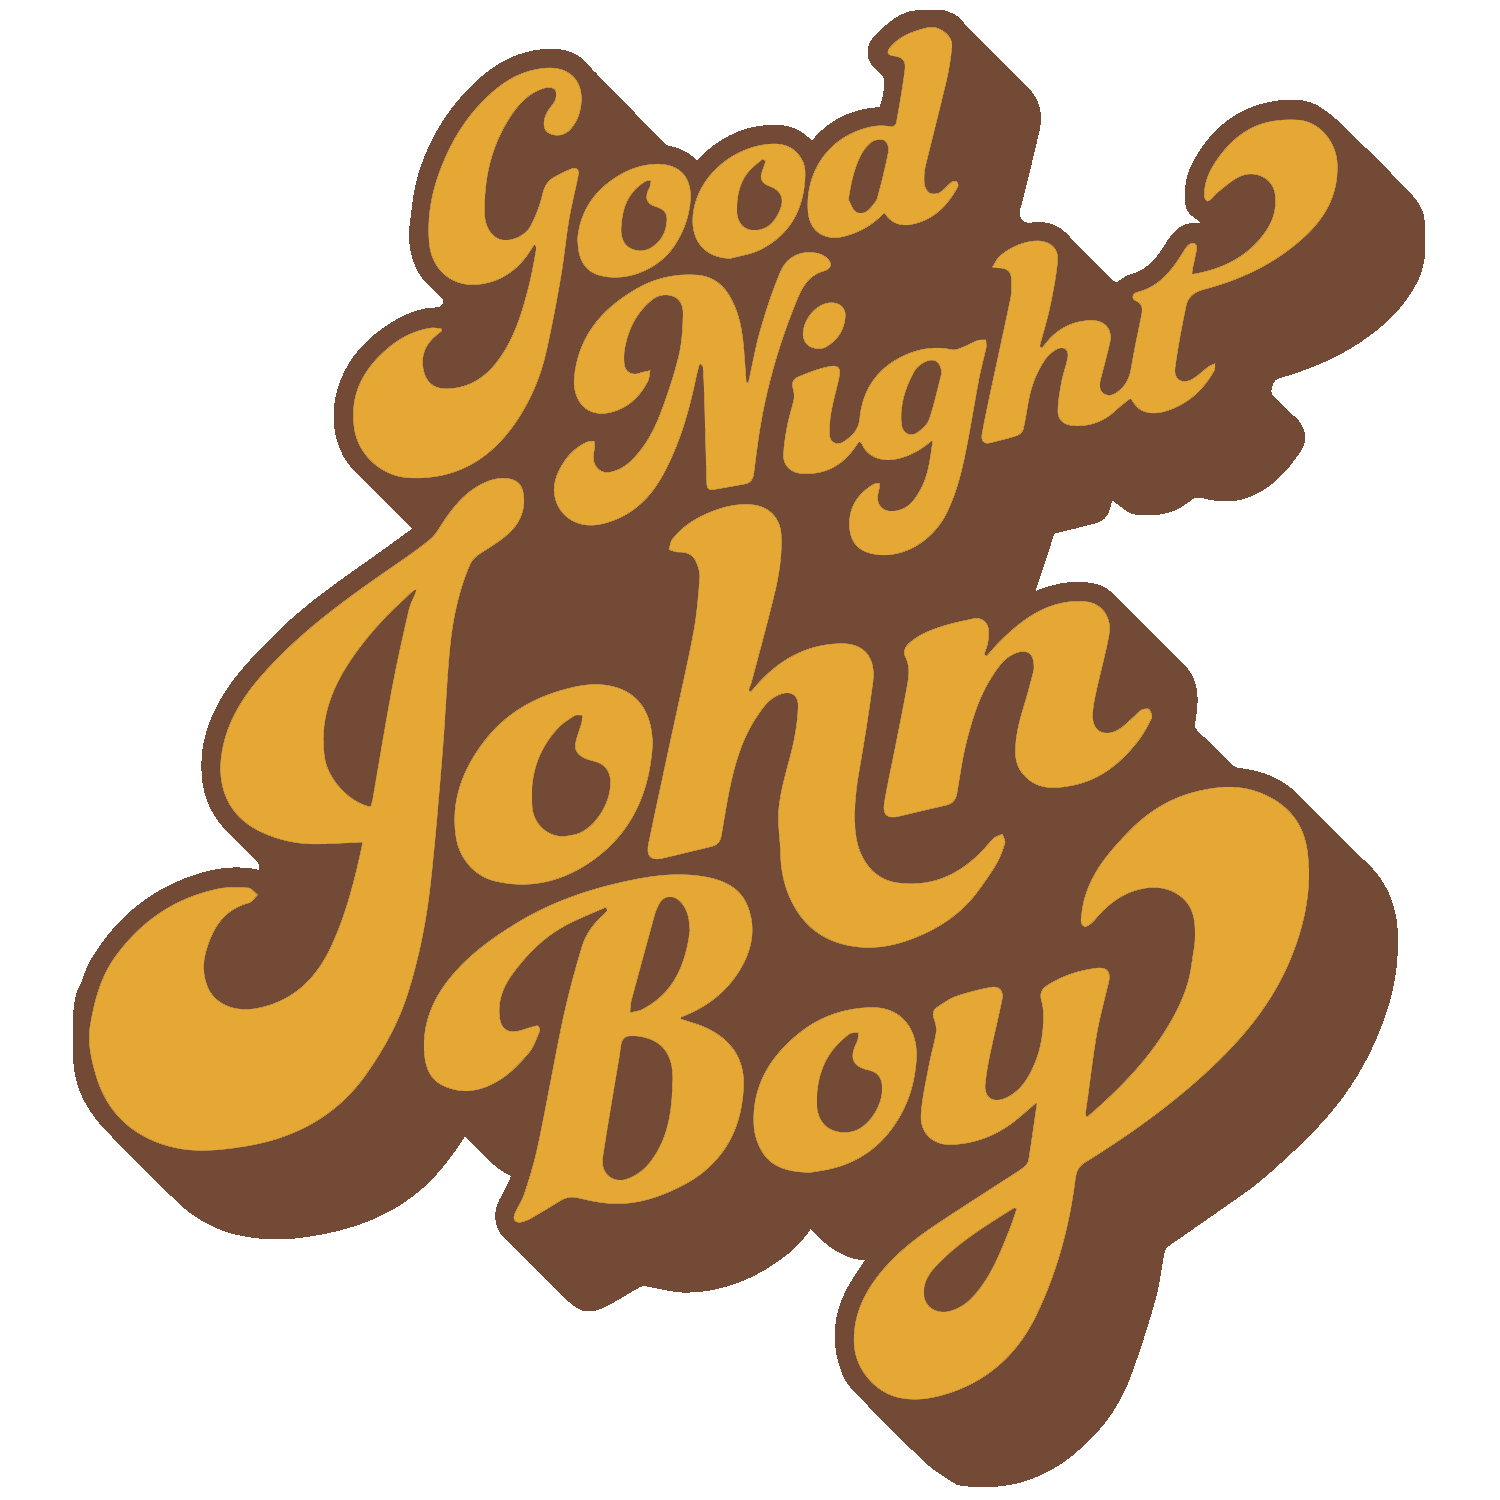 Good Night John Boy Cleveland Flats East Bank Bar